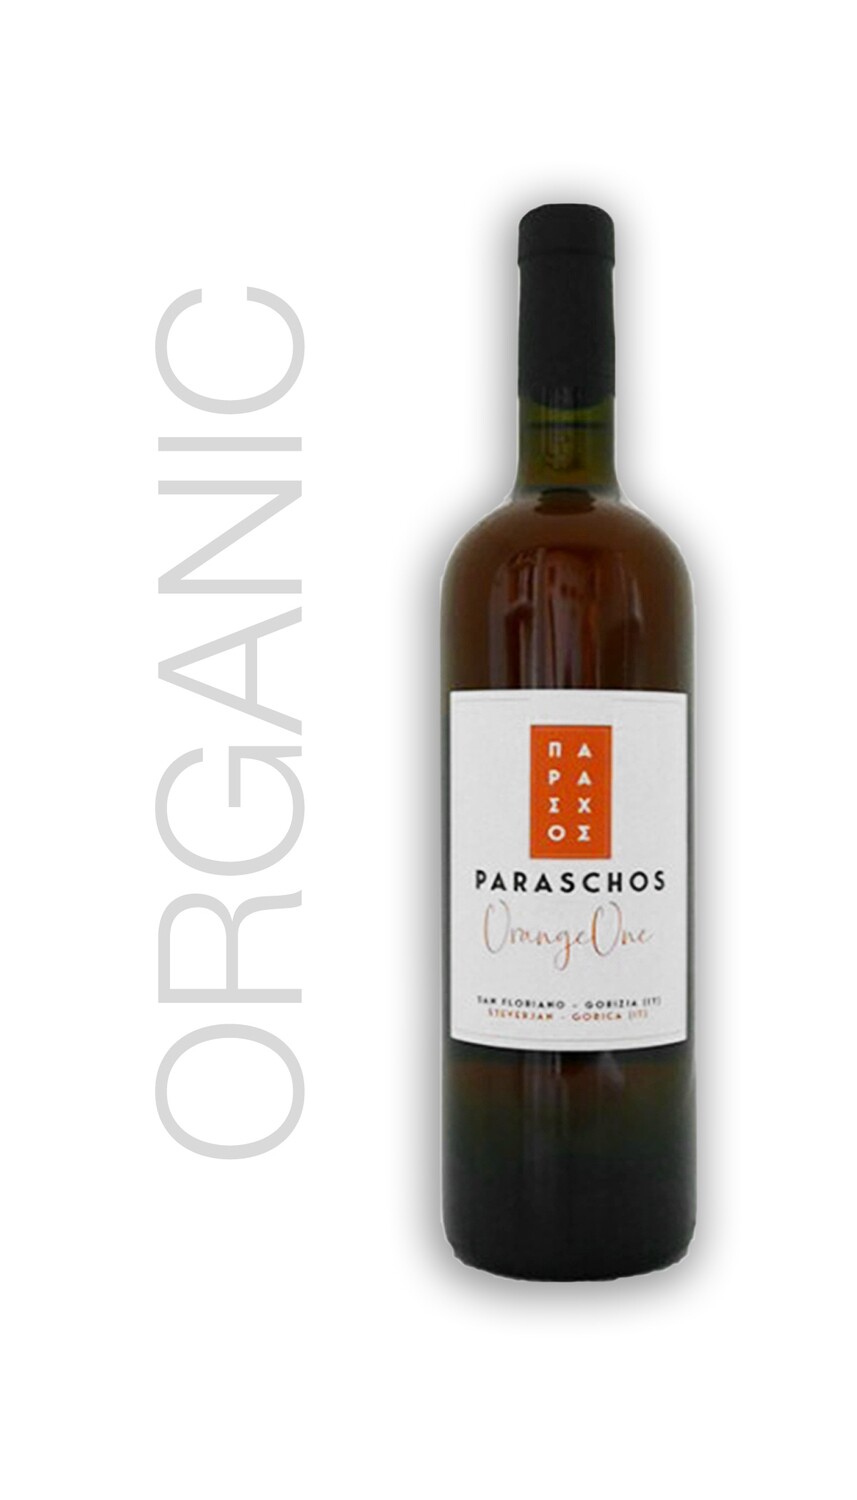 Paraschos OrangeOne Organic orange wine 2018